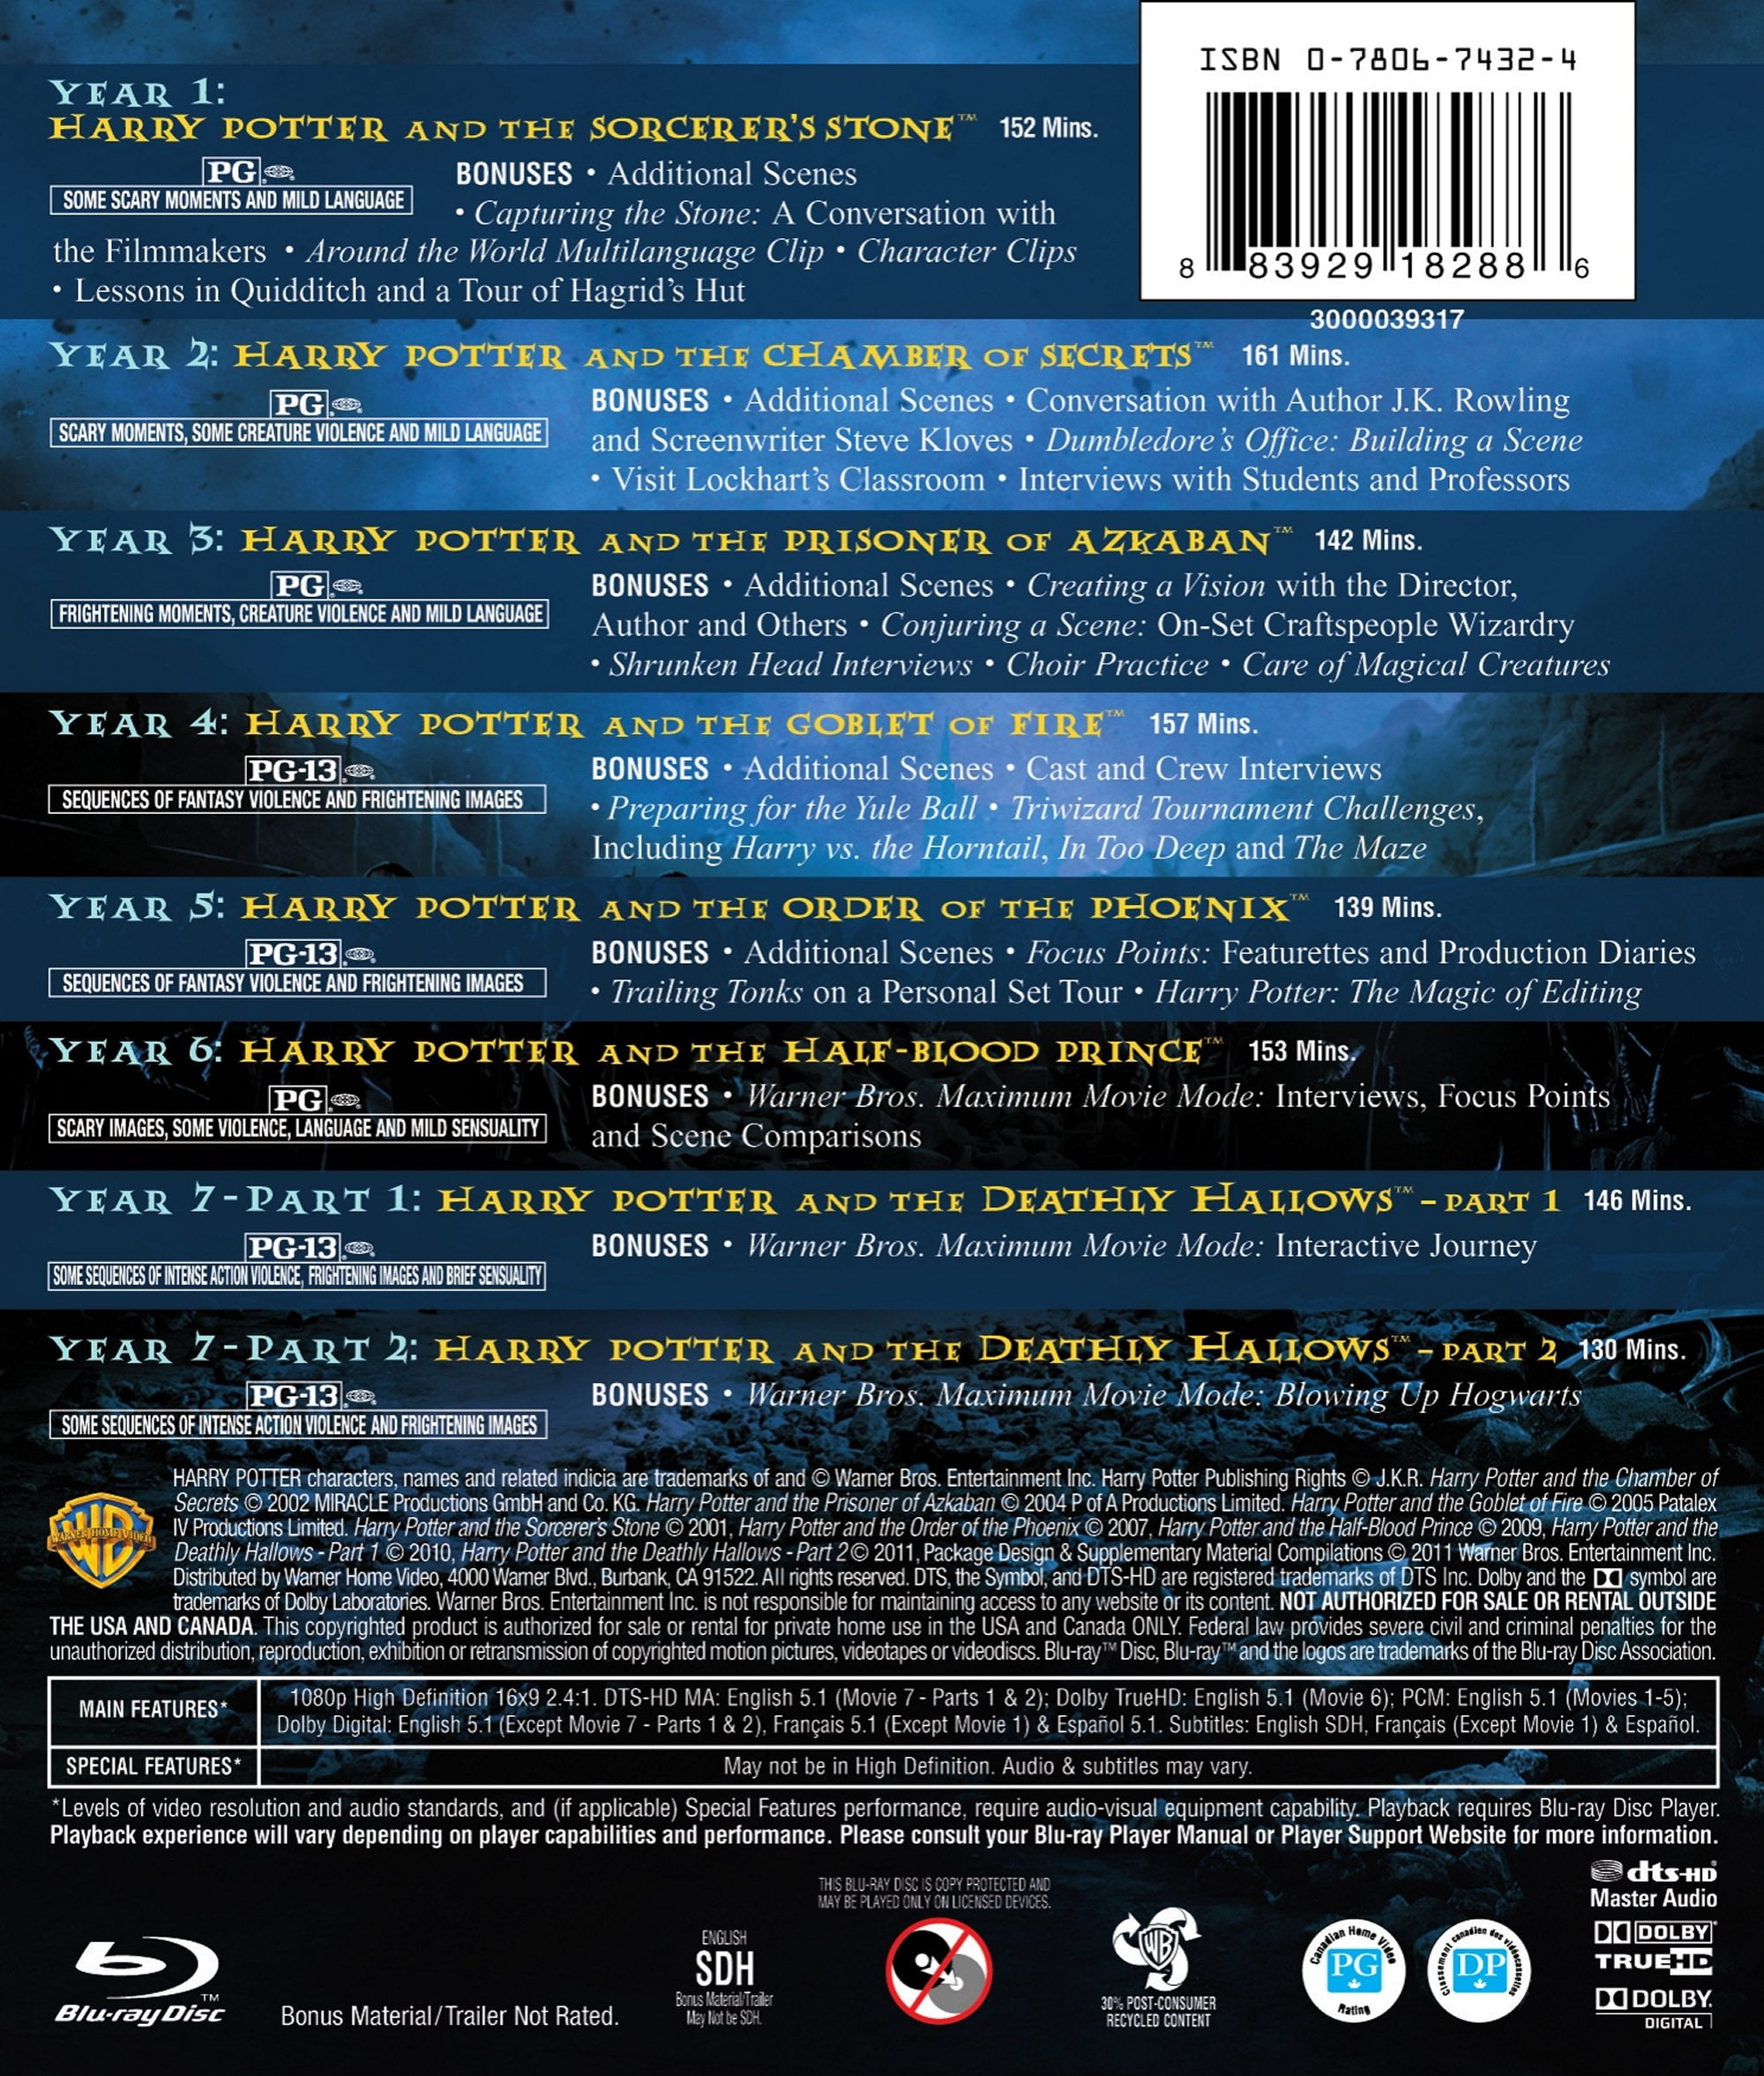 Harry Potter – Intégrale 8 Films : Edition  [Blu-ray]: DVD et Blu-ray  